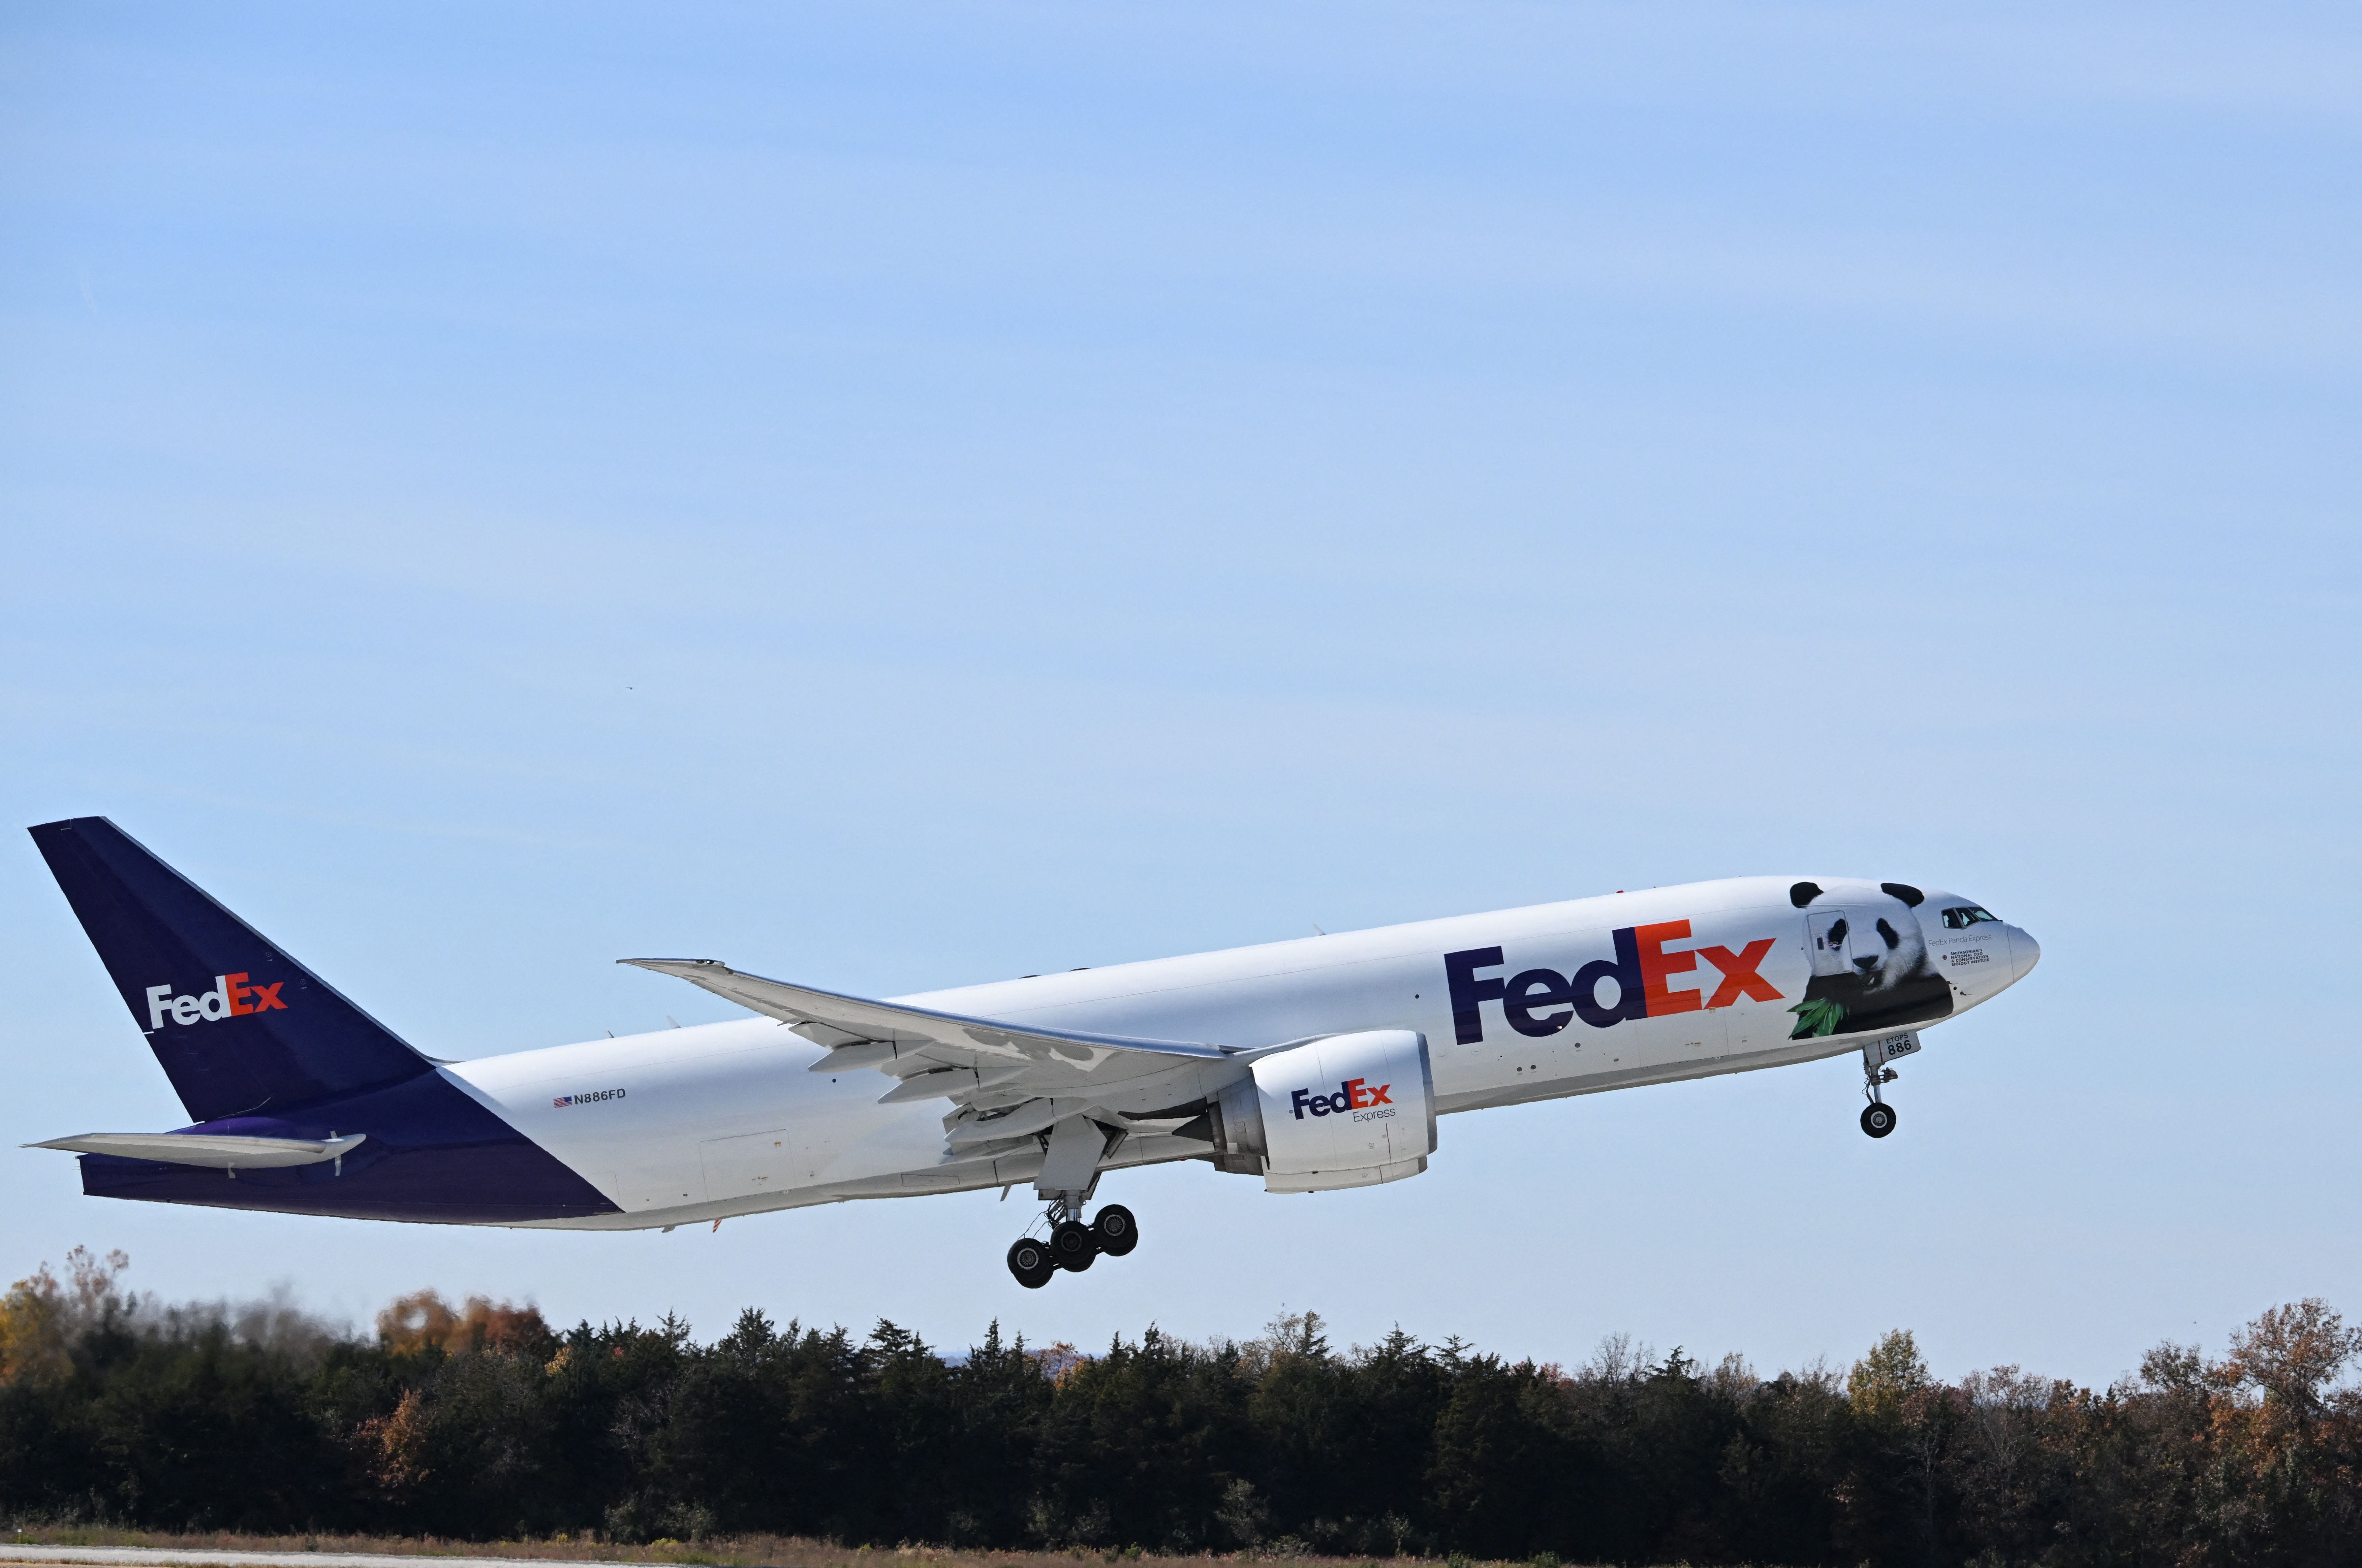 Fedex-Flugzeug mit Panda darauf